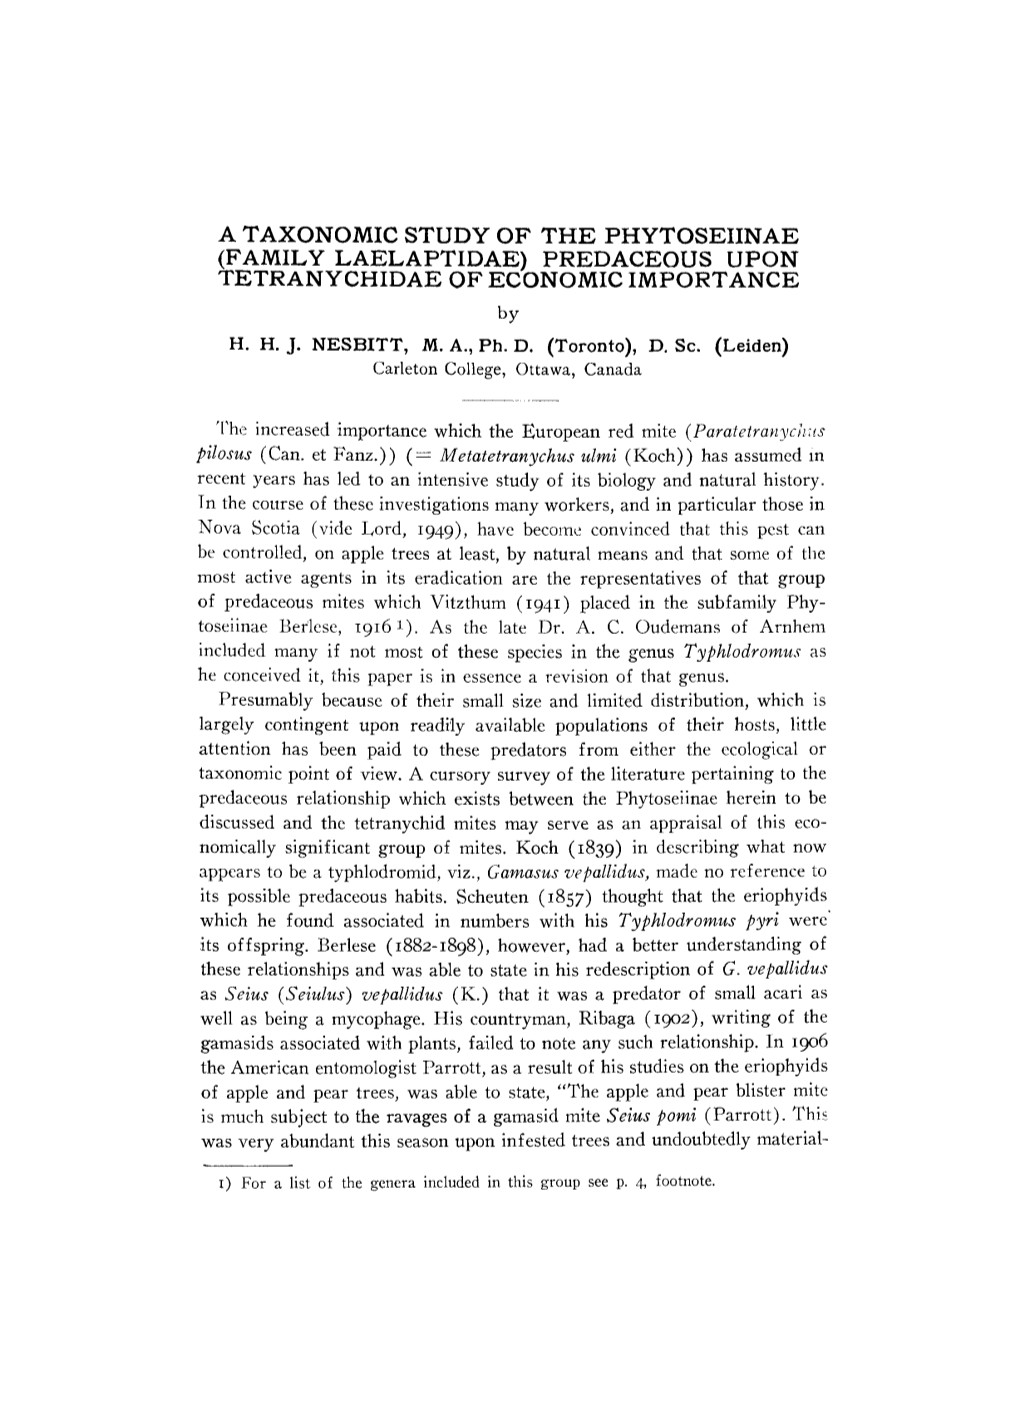 A Taxonomic Study of the Phytoseiinae (Family Laelaptidae) Predaceous Upon Tetranychidae of Economic Importance